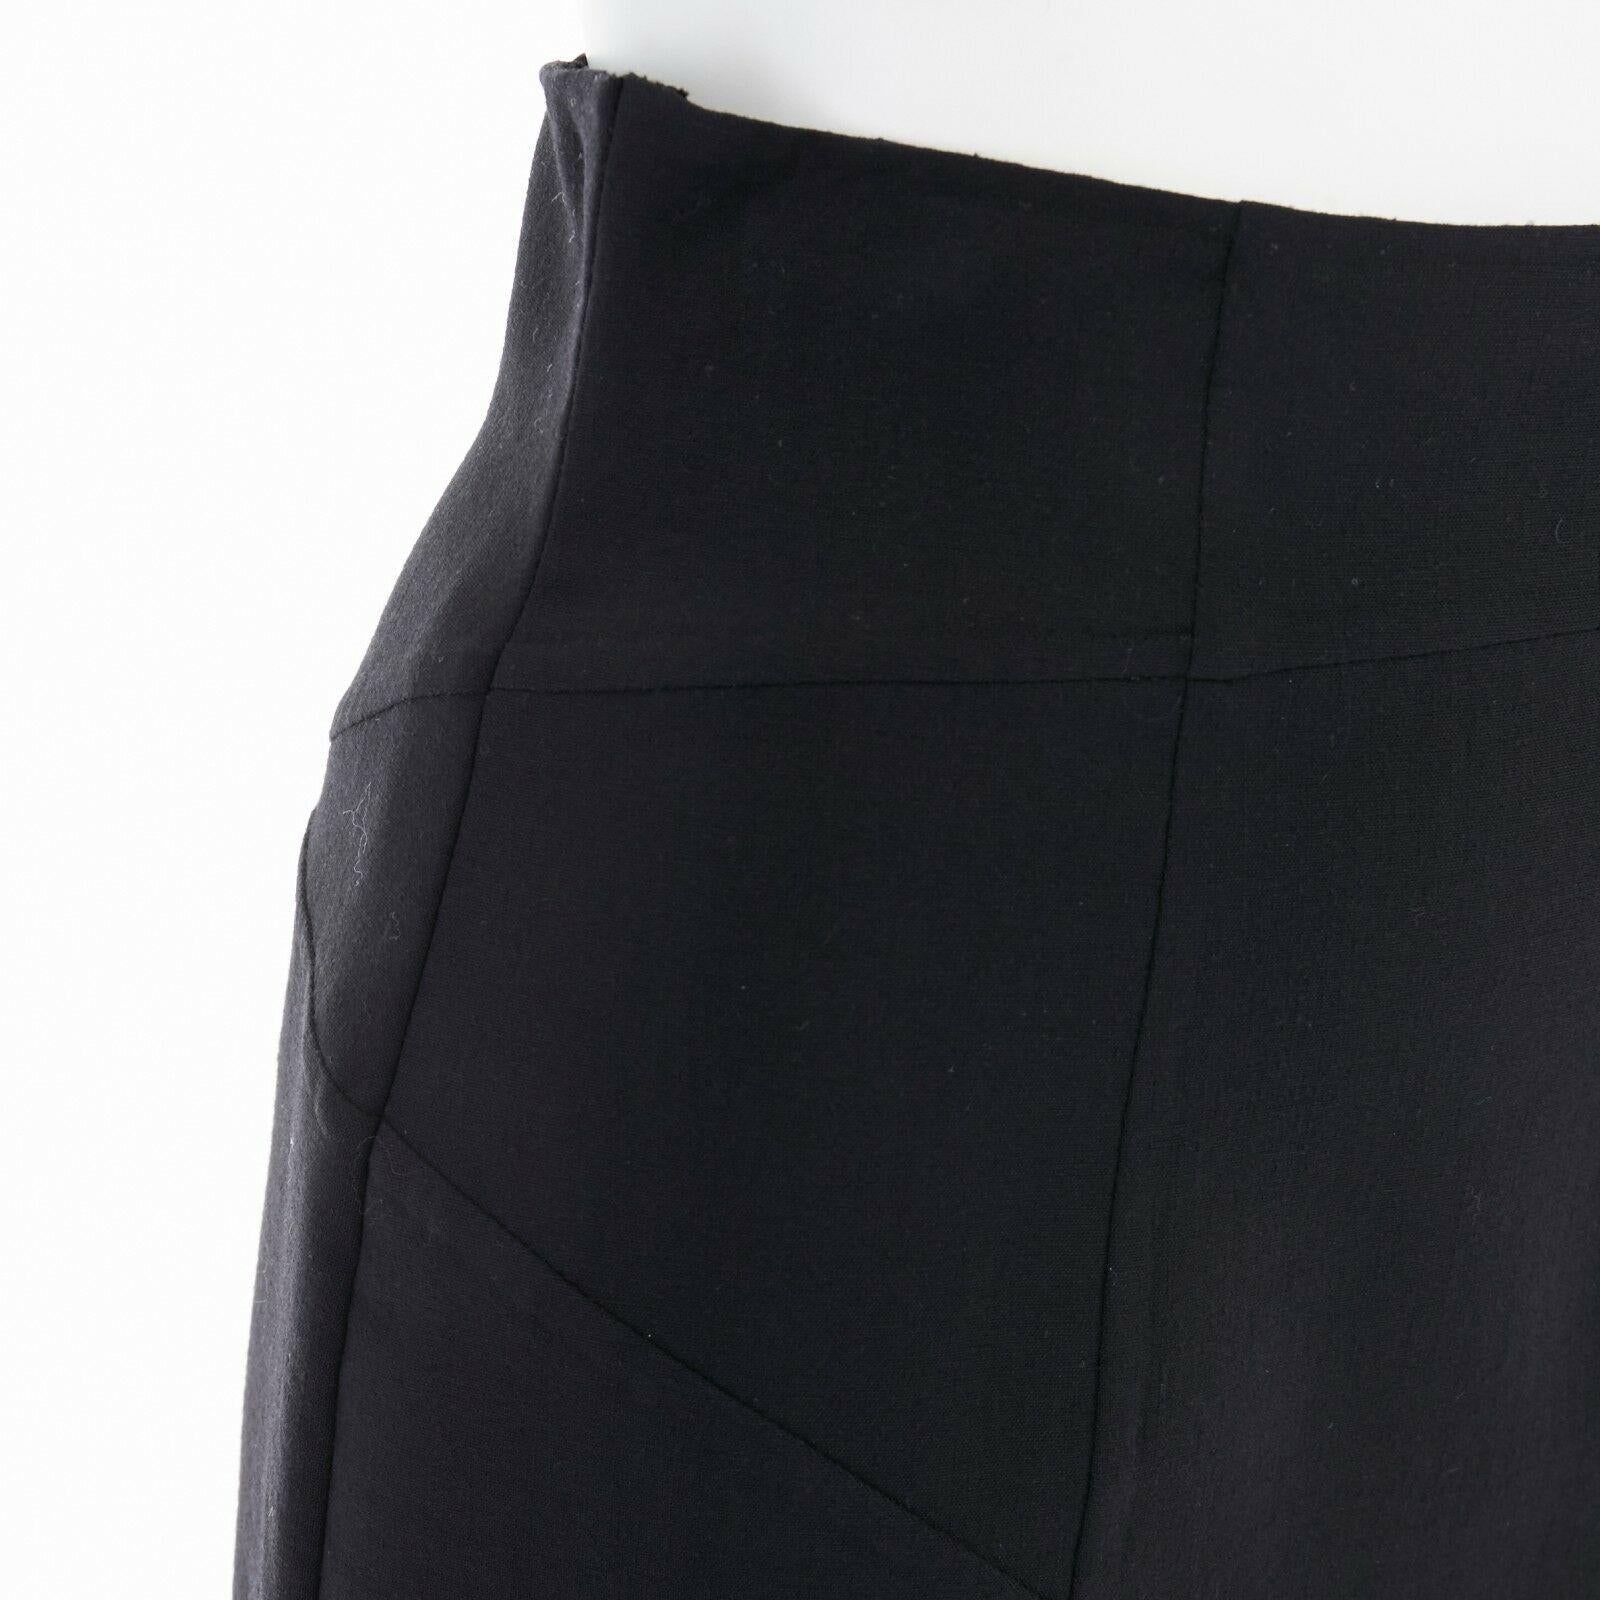 OSCAR DE LA RENTA Prefill 2011 black virgin wool triangular dart skirt US2 26